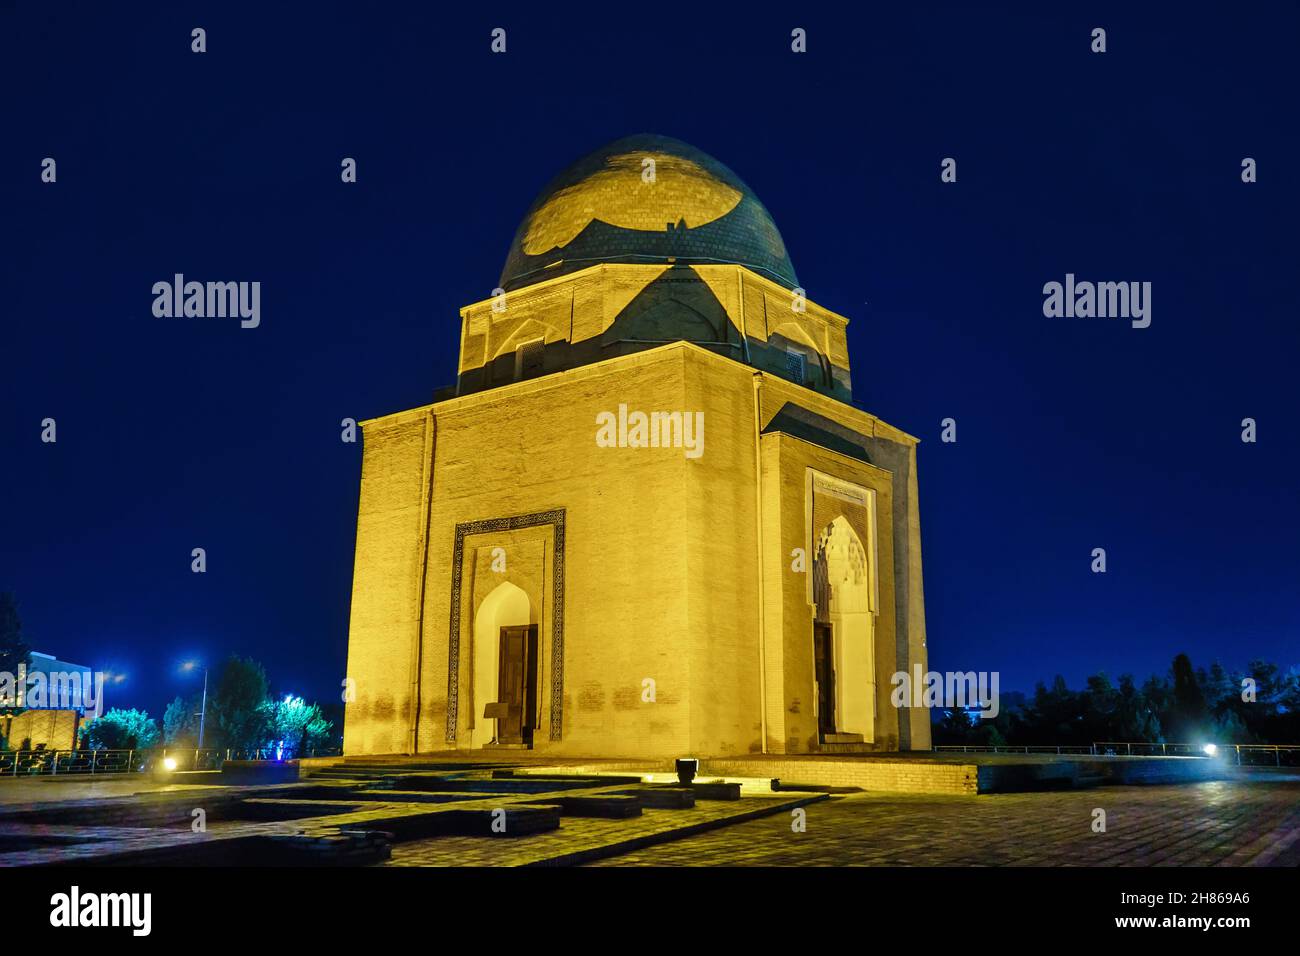 Rukhabad mausoleum illuminated at night, Samarkand, Uzbekistan. The building looks mystical and mysterious Stock Photo